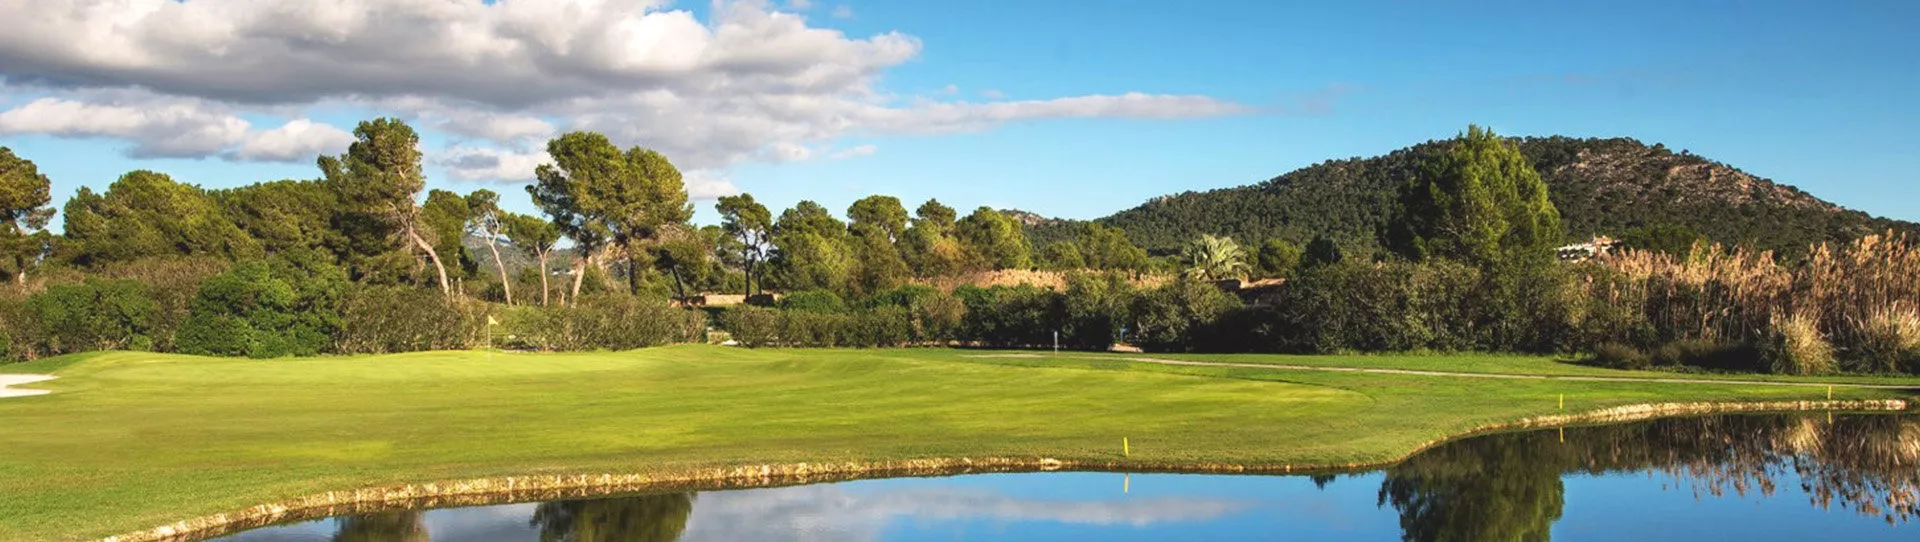 Spain golf holidays - Santa Ponsa I & Bendinat 2 Rounds - Photo 1